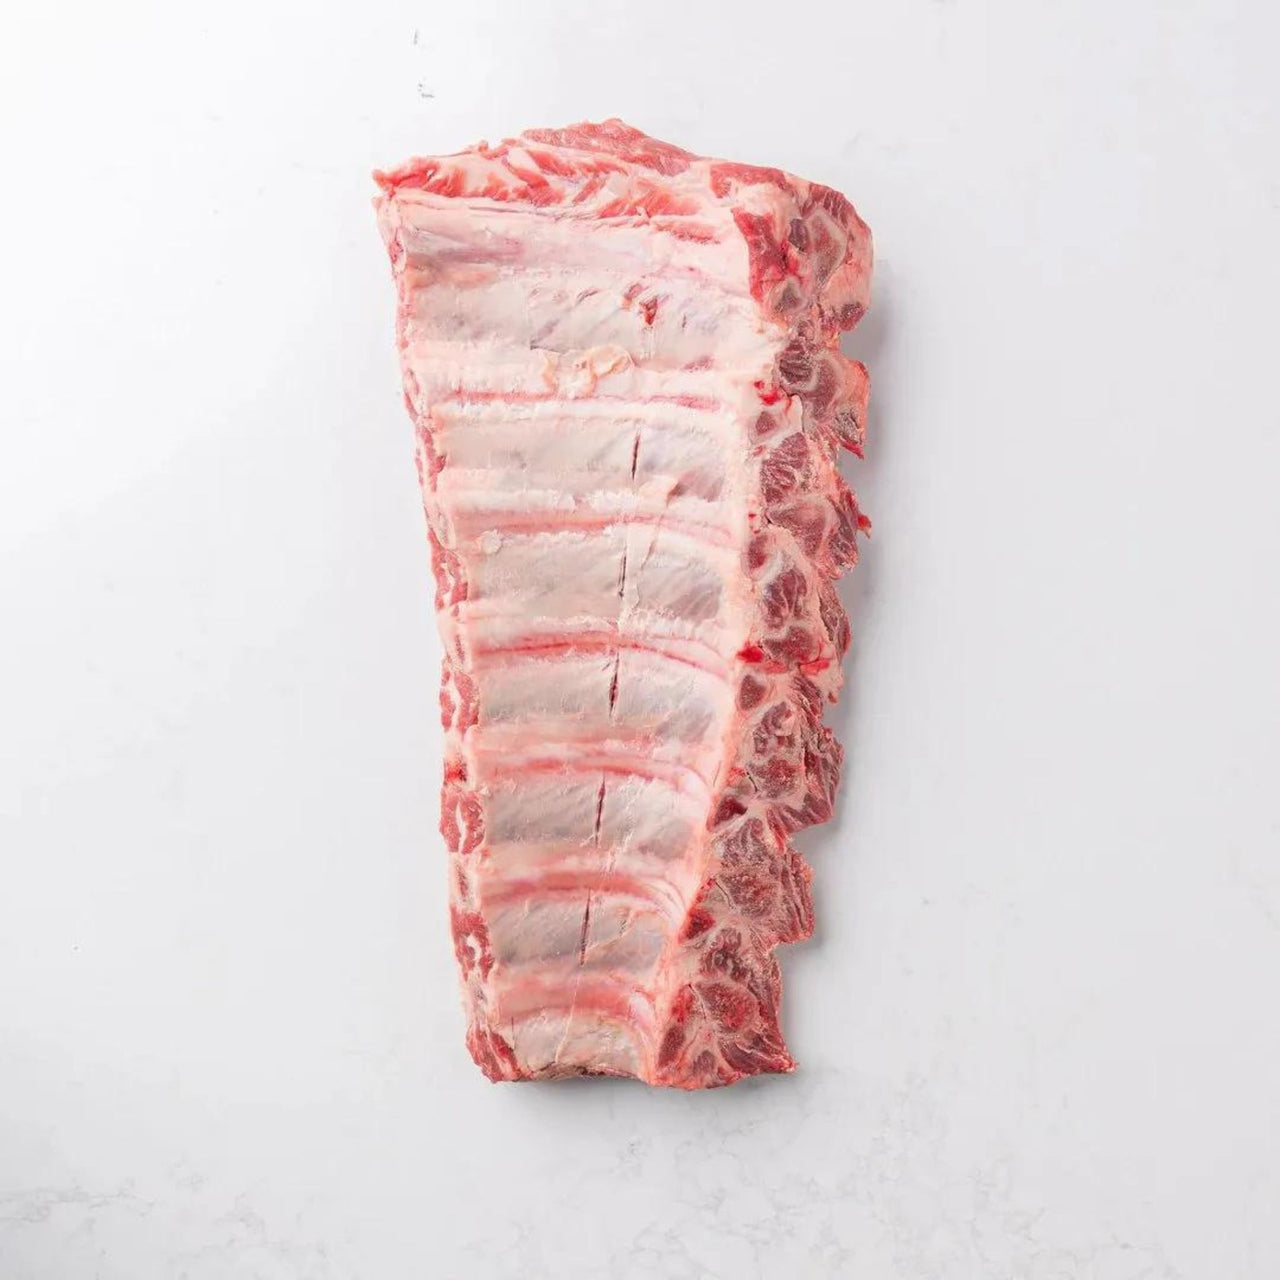 Image of F2F Premium Beef Ribs 4 Racks | 15lbs avg.